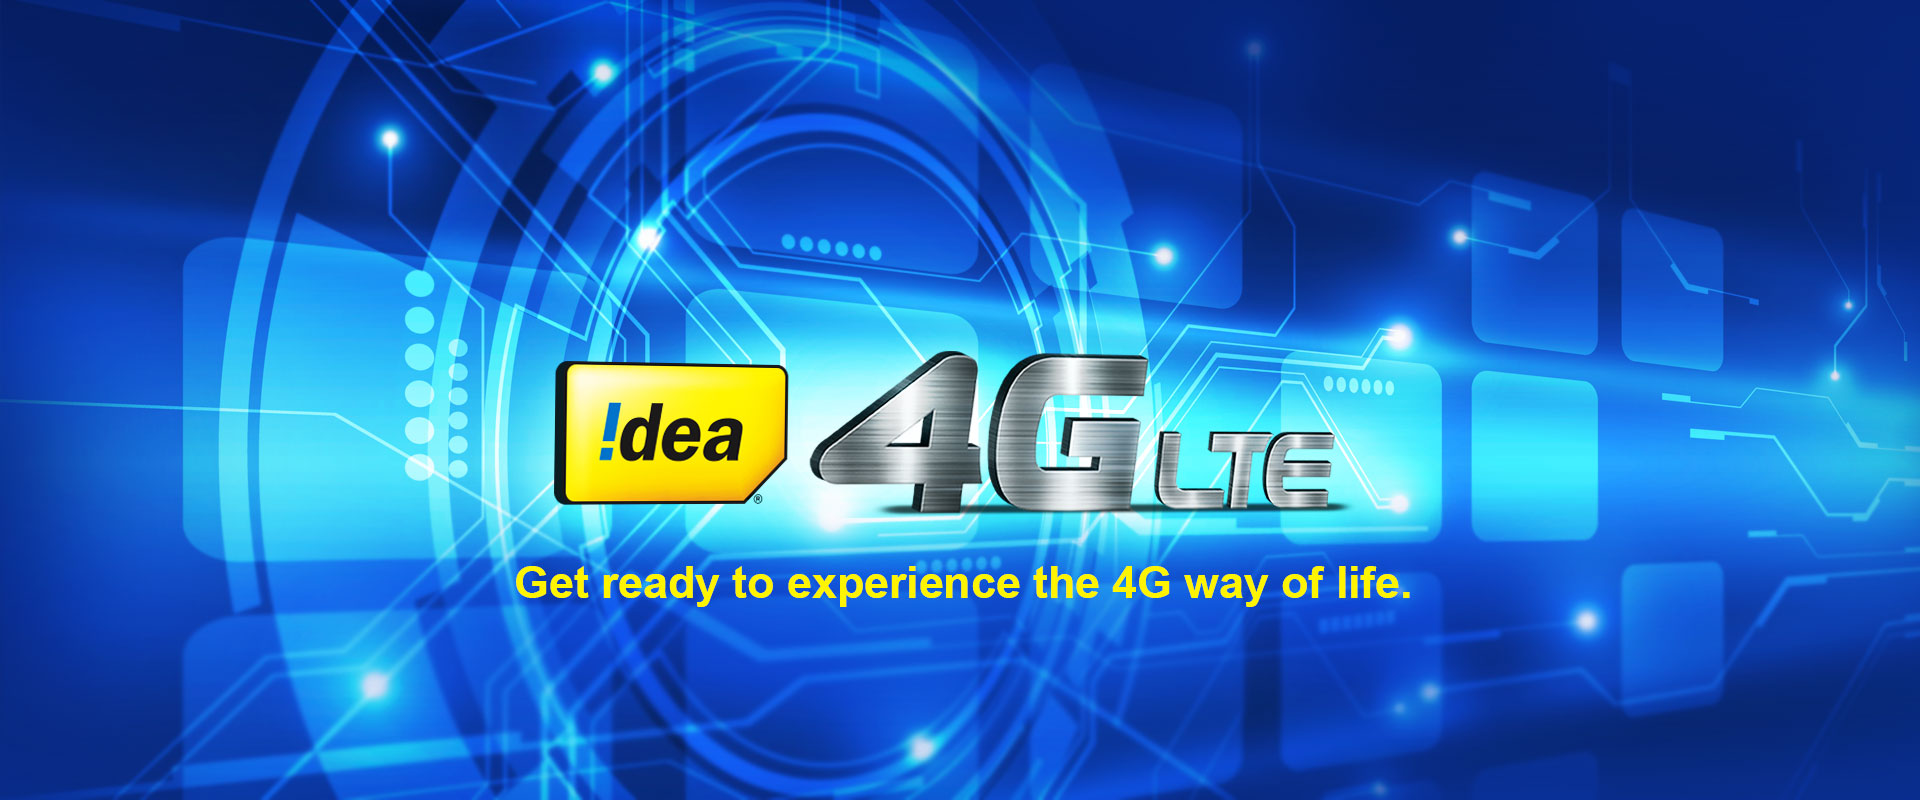 Idea Cellular 4G